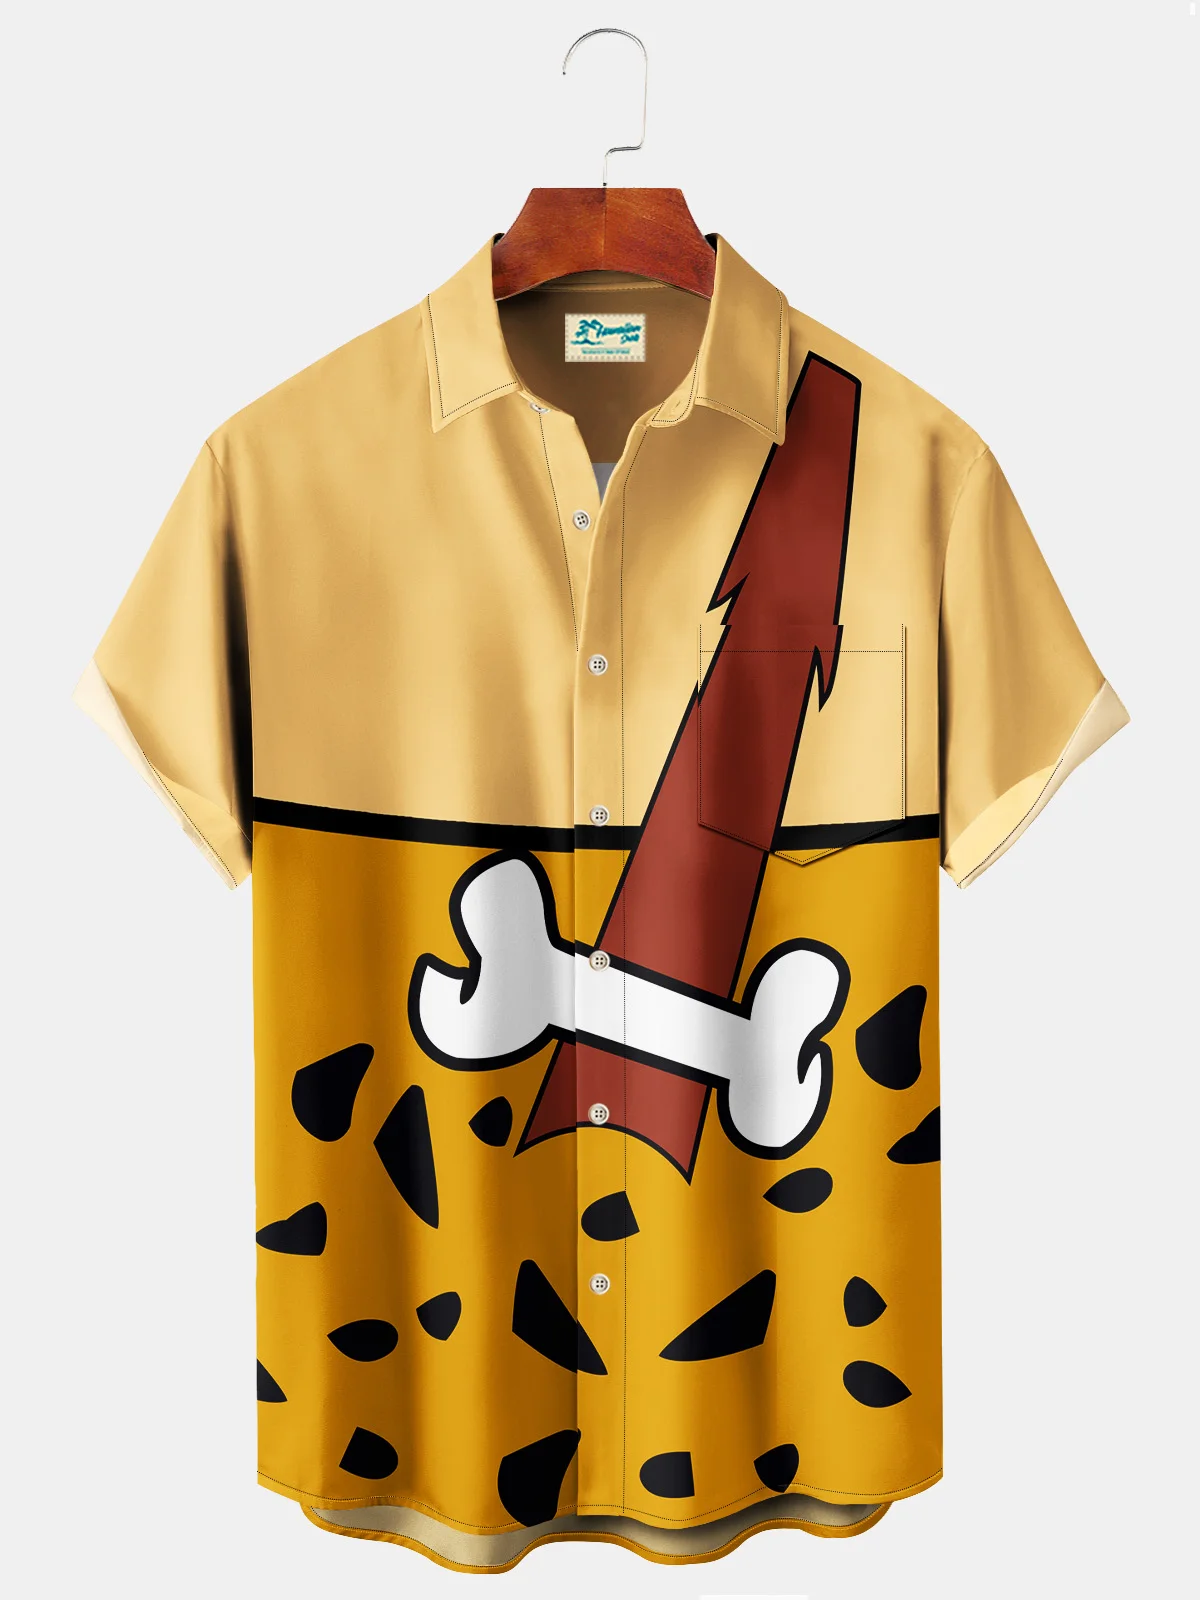 Royaura 50‘s Vintage Cartoon Khaki Men's Casual Shirts Plus Size Stretch Camp Pocket Shirts